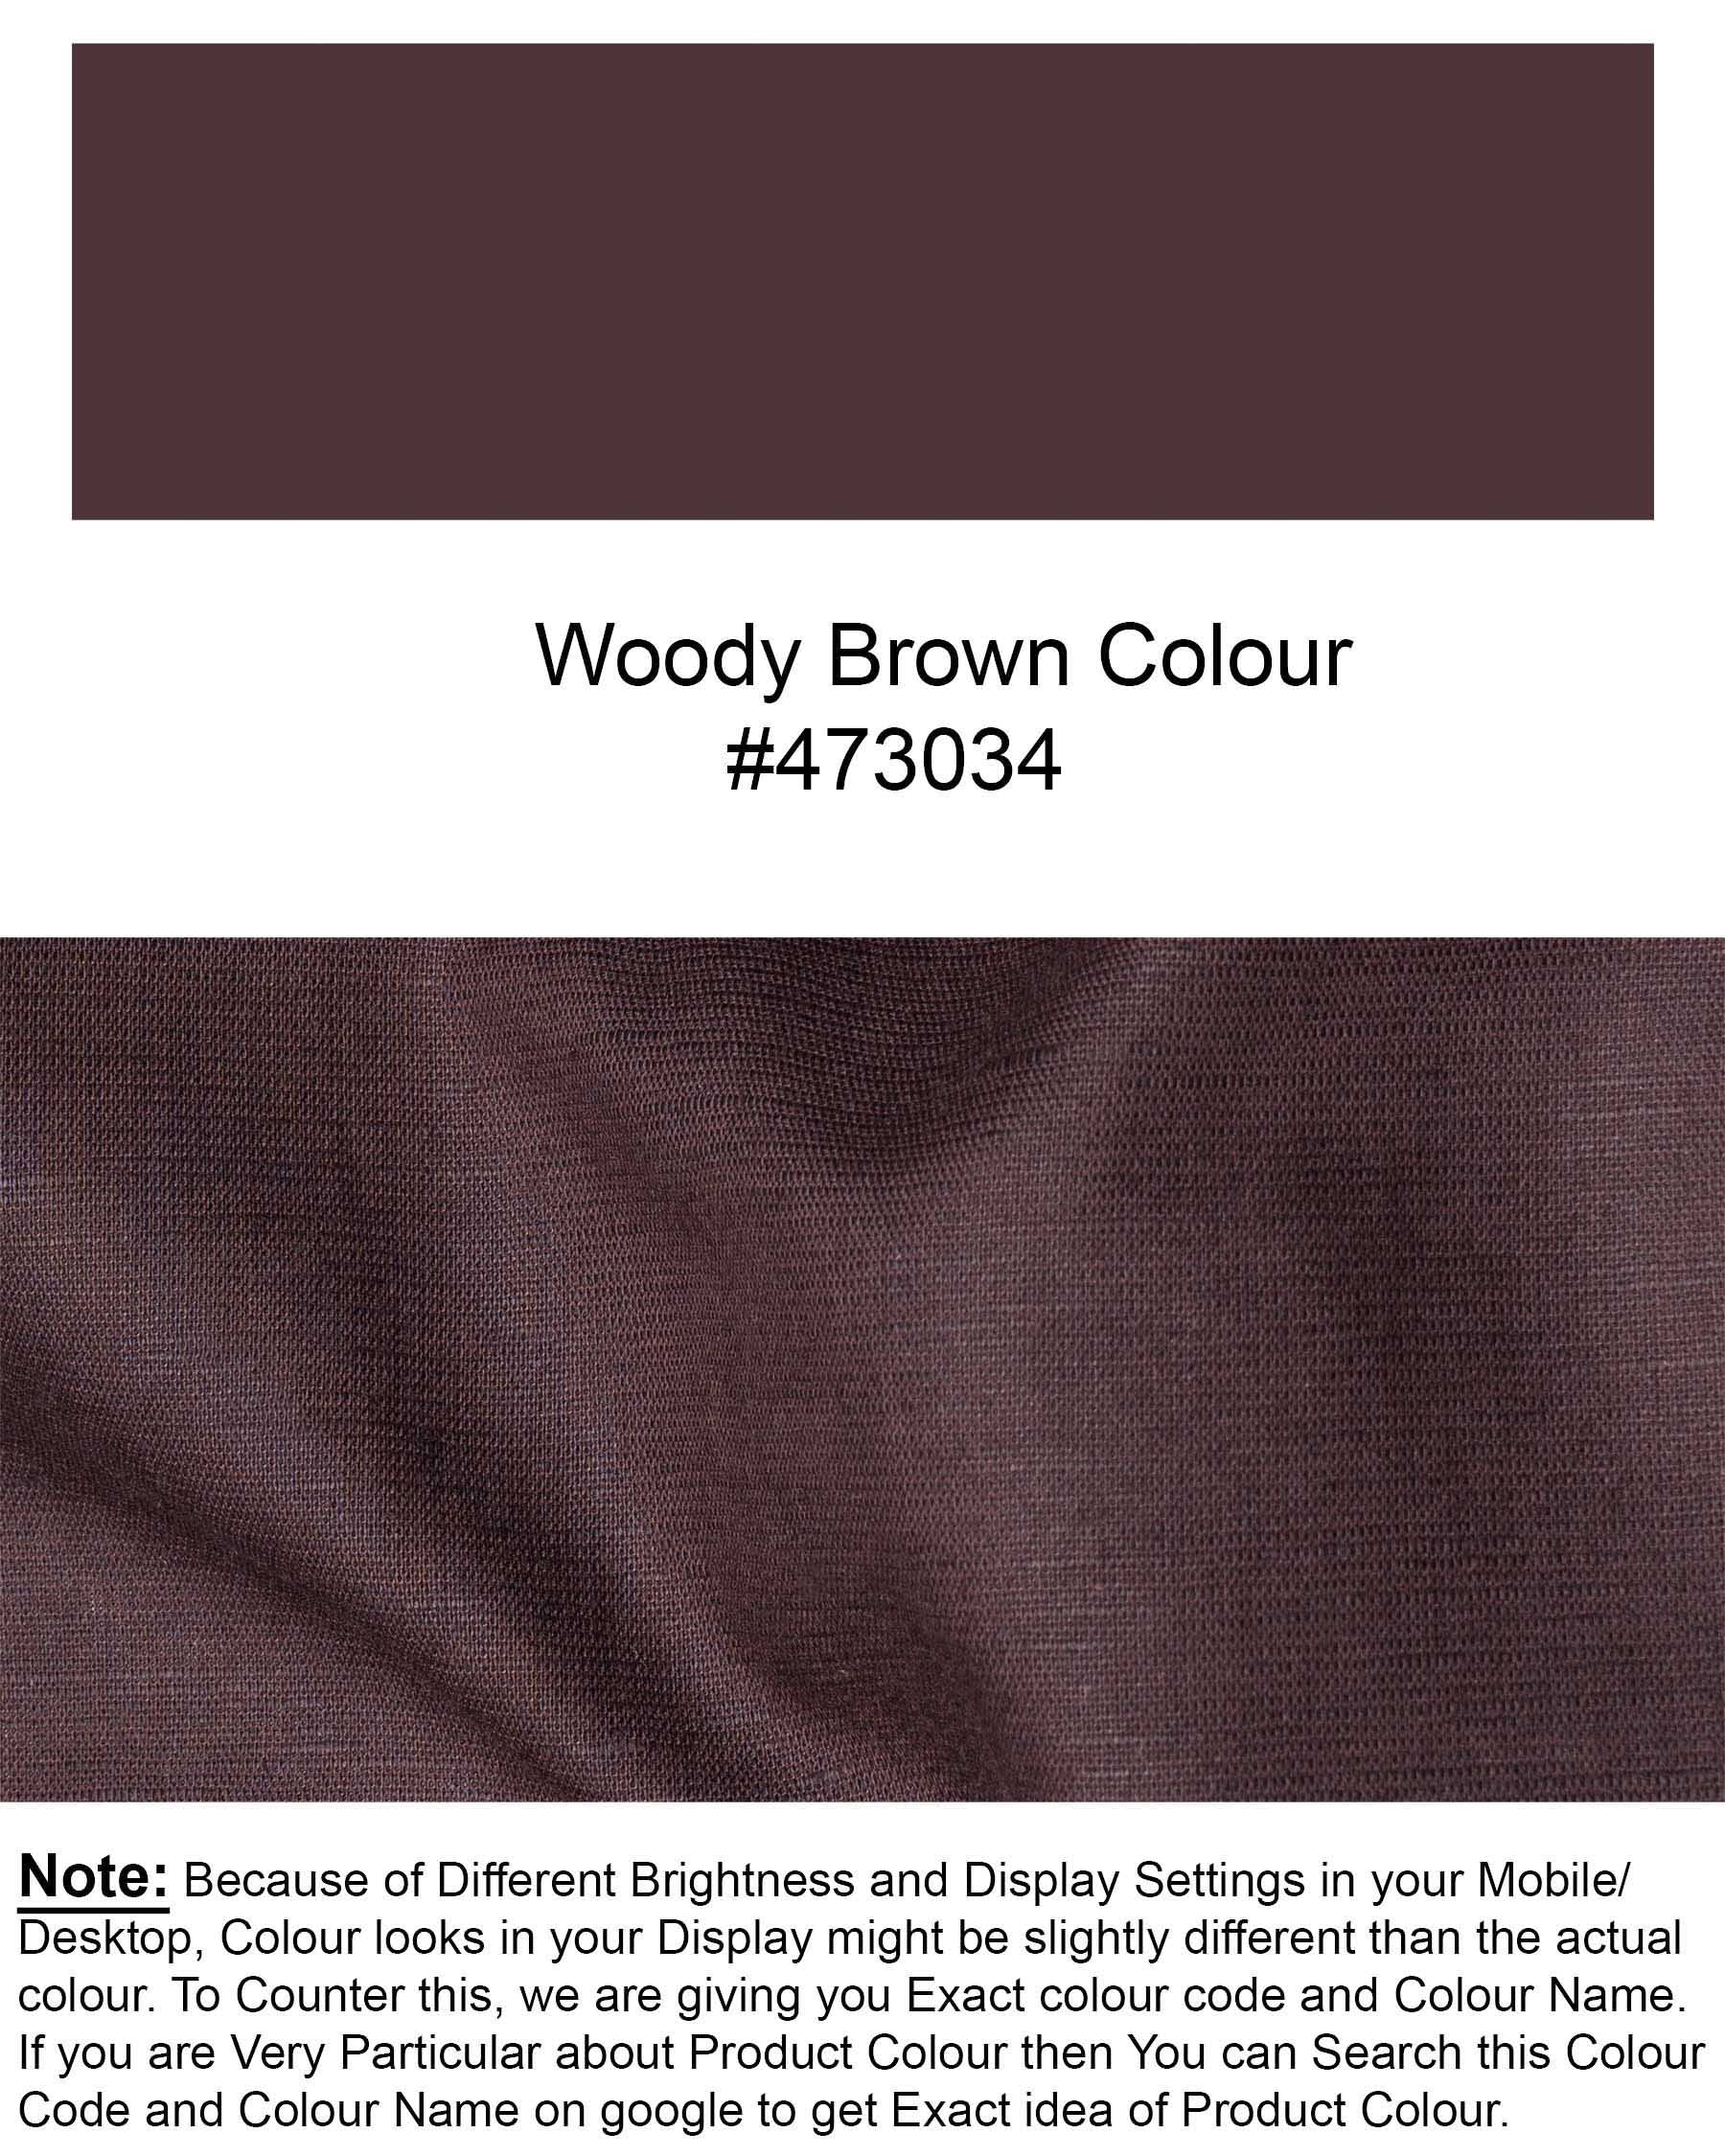 Woody Brown Luxurious Linen Shirt 5842-M-38, 5842-M-H-38, 5842-M-39, 5842-M-H-39, 5842-M-40, 5842-M-H-40, 5842-M-42, 5842-M-H-42, 5842-M-44, 5842-M-H-44, 5842-M-46, 5842-M-H-46, 5842-M-48, 5842-M-H-48, 5842-M-50, 5842-M-H-50, 5842-M-52, 5842-M-H-52